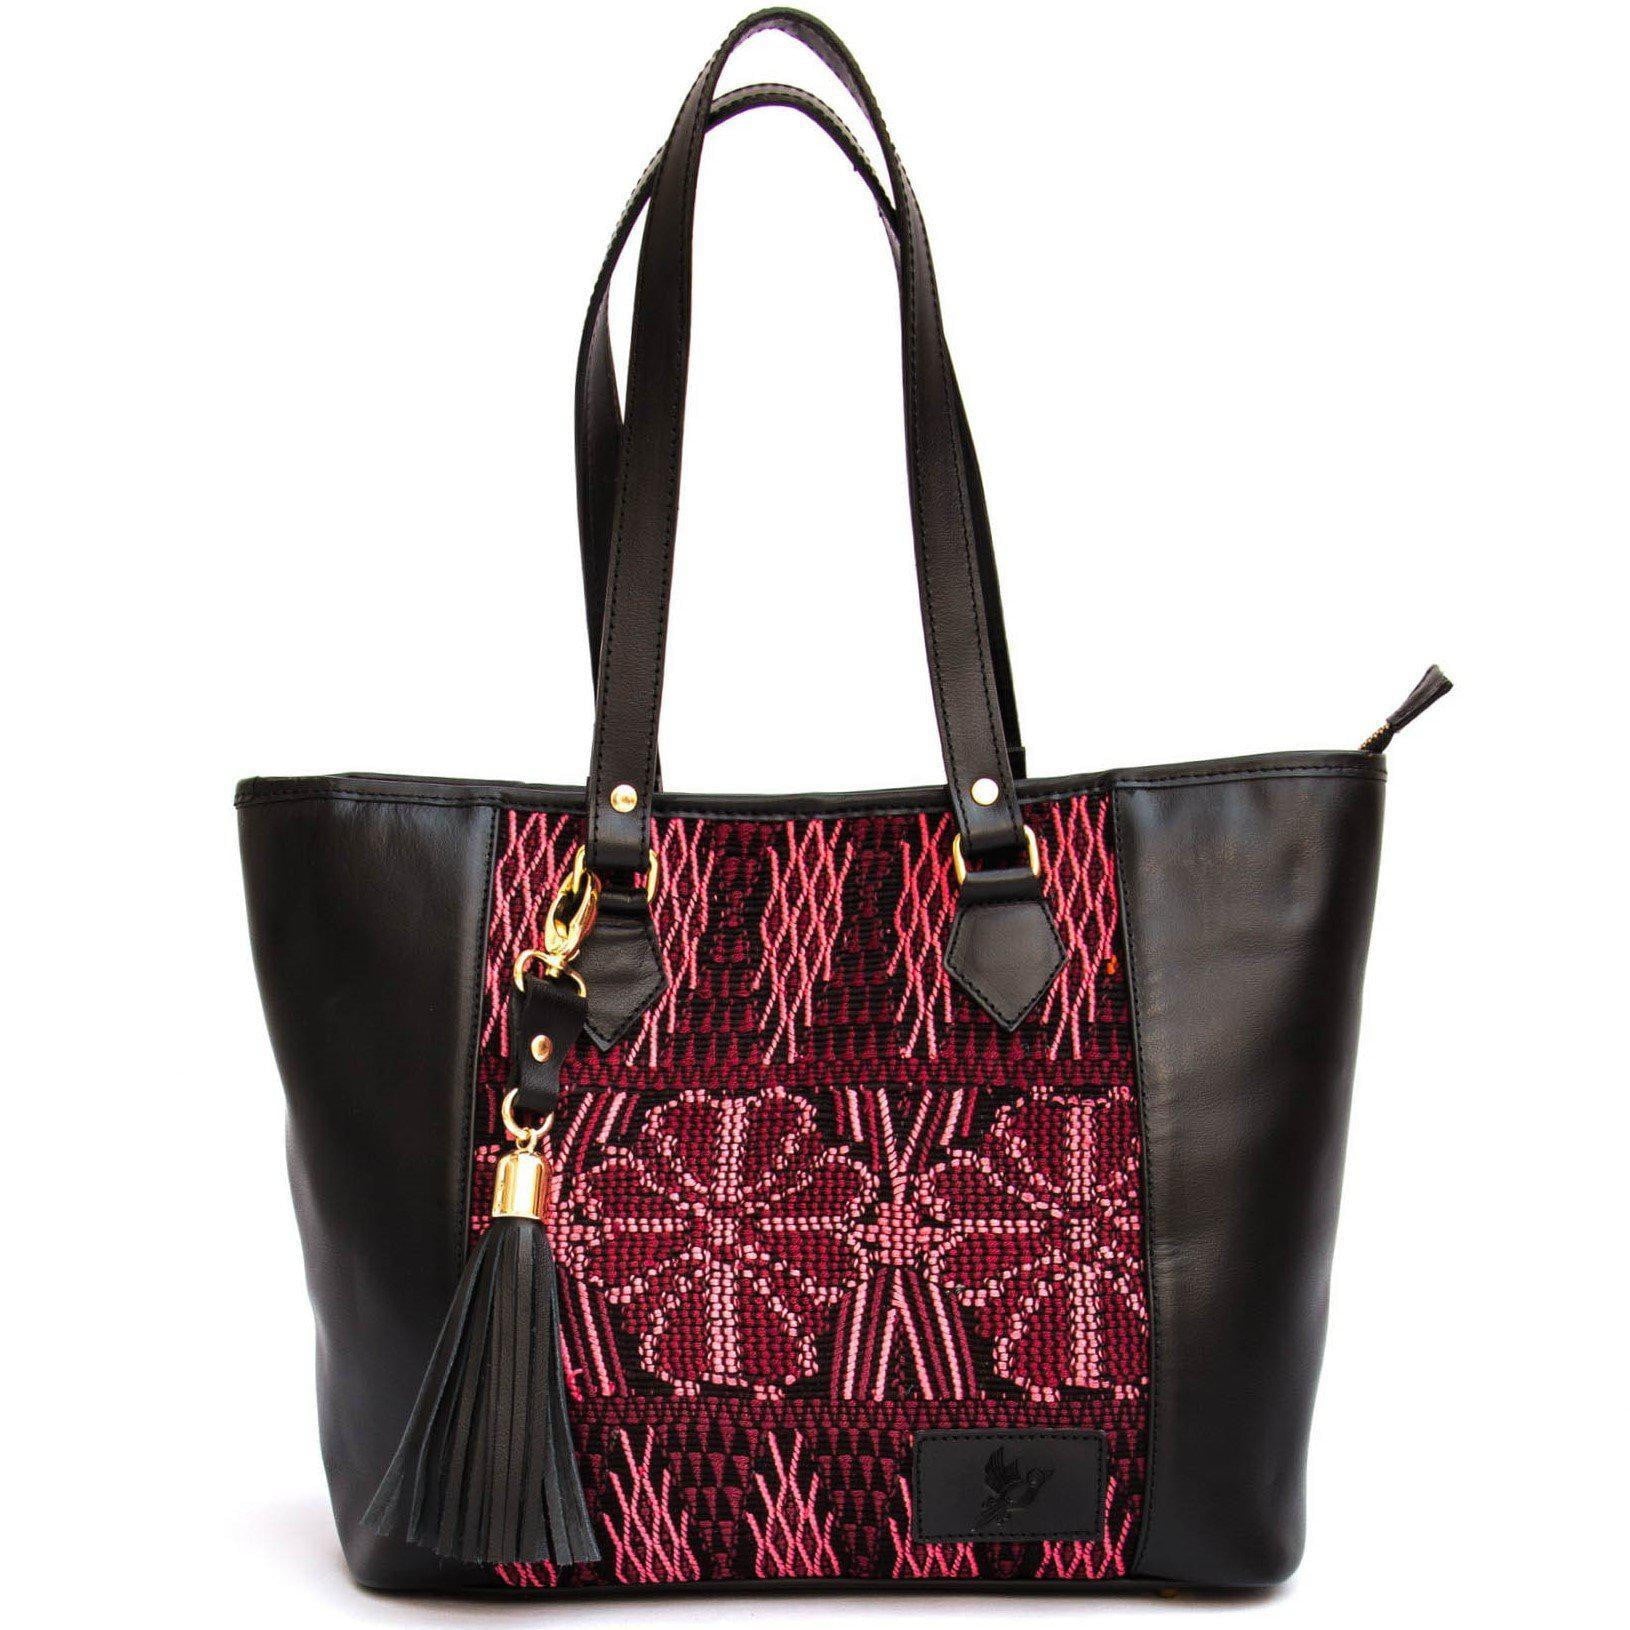 MAIA-Women's casual handmade genuine leather handbag with zip closure